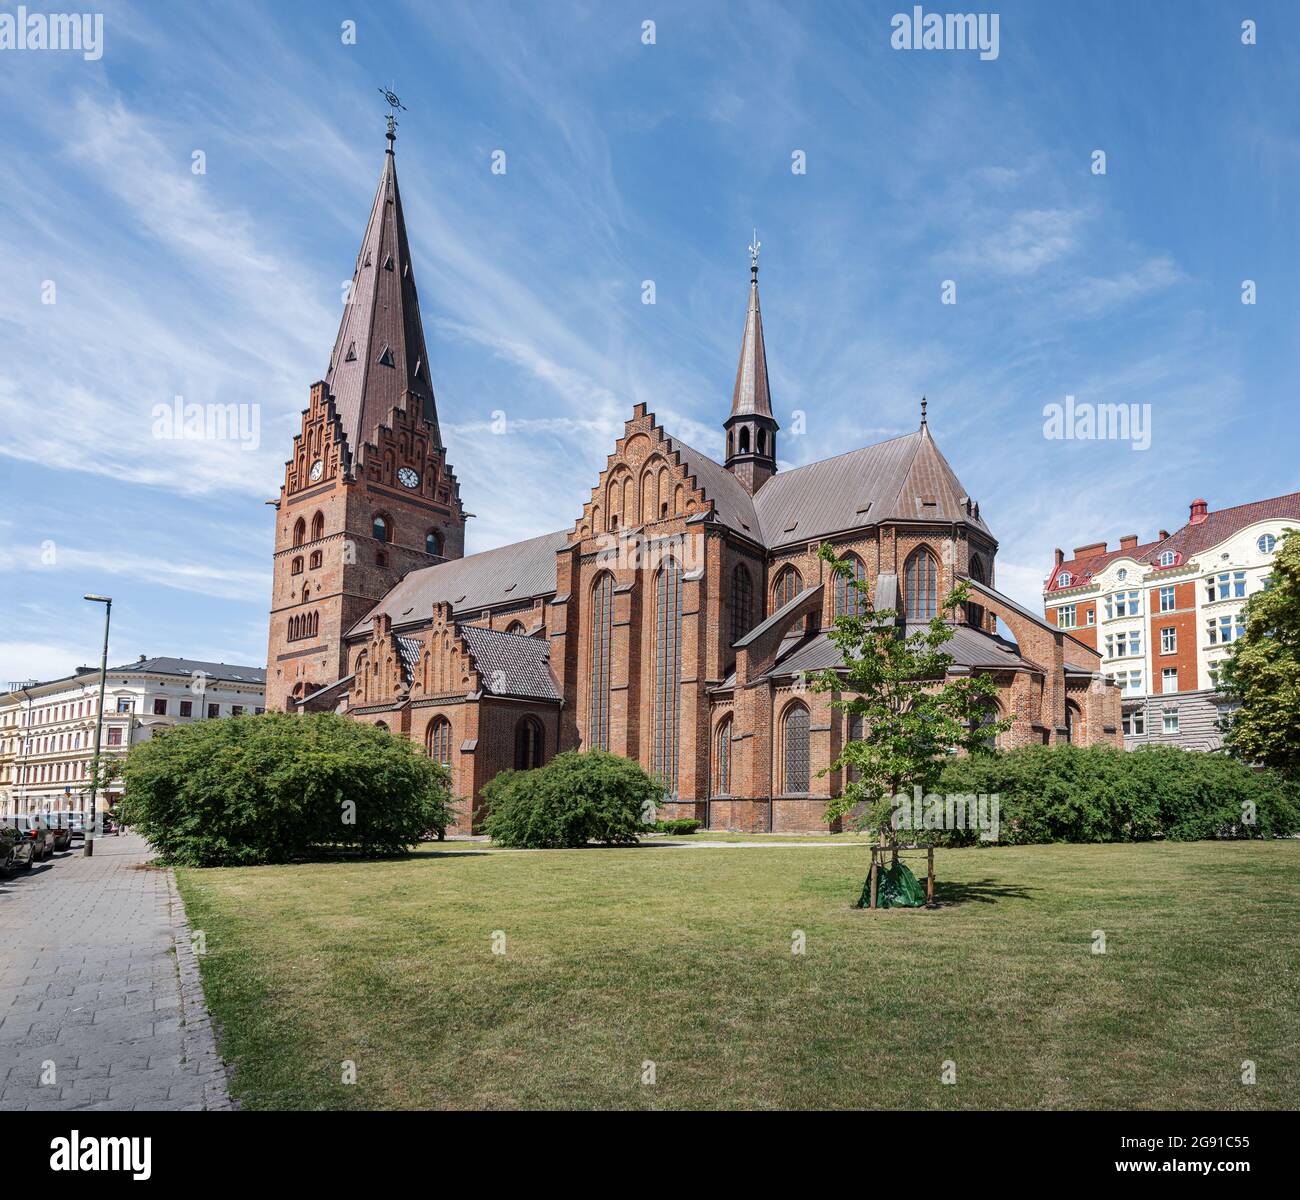 Saint Peter's Church - Malmo, Sweden Stock Photo